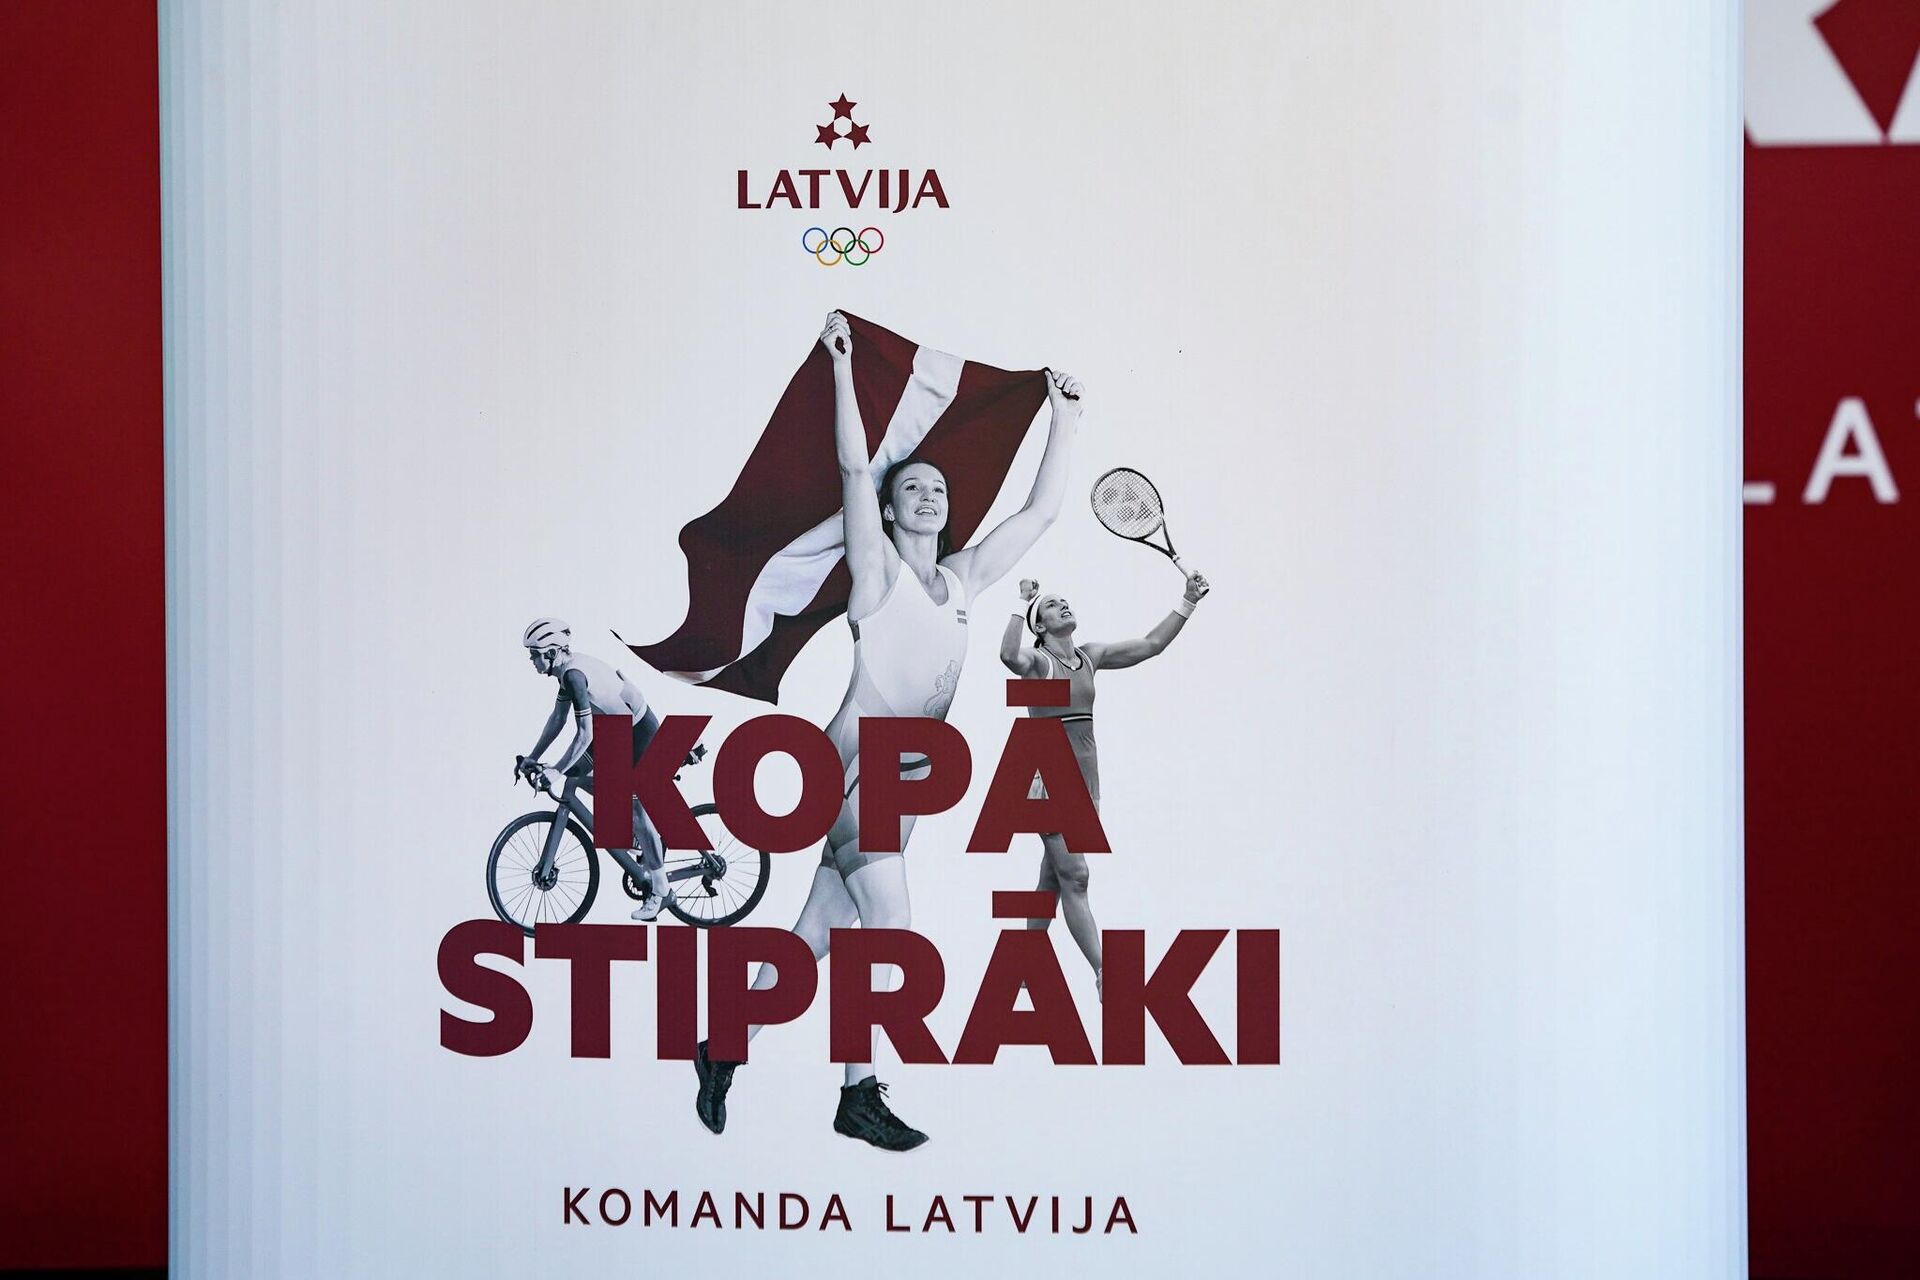 Плакат Латвийского олимпийского комитета в поддержку команды на Олимпиаде в Токио - Sputnik Латвия, 1920, 18.07.2021